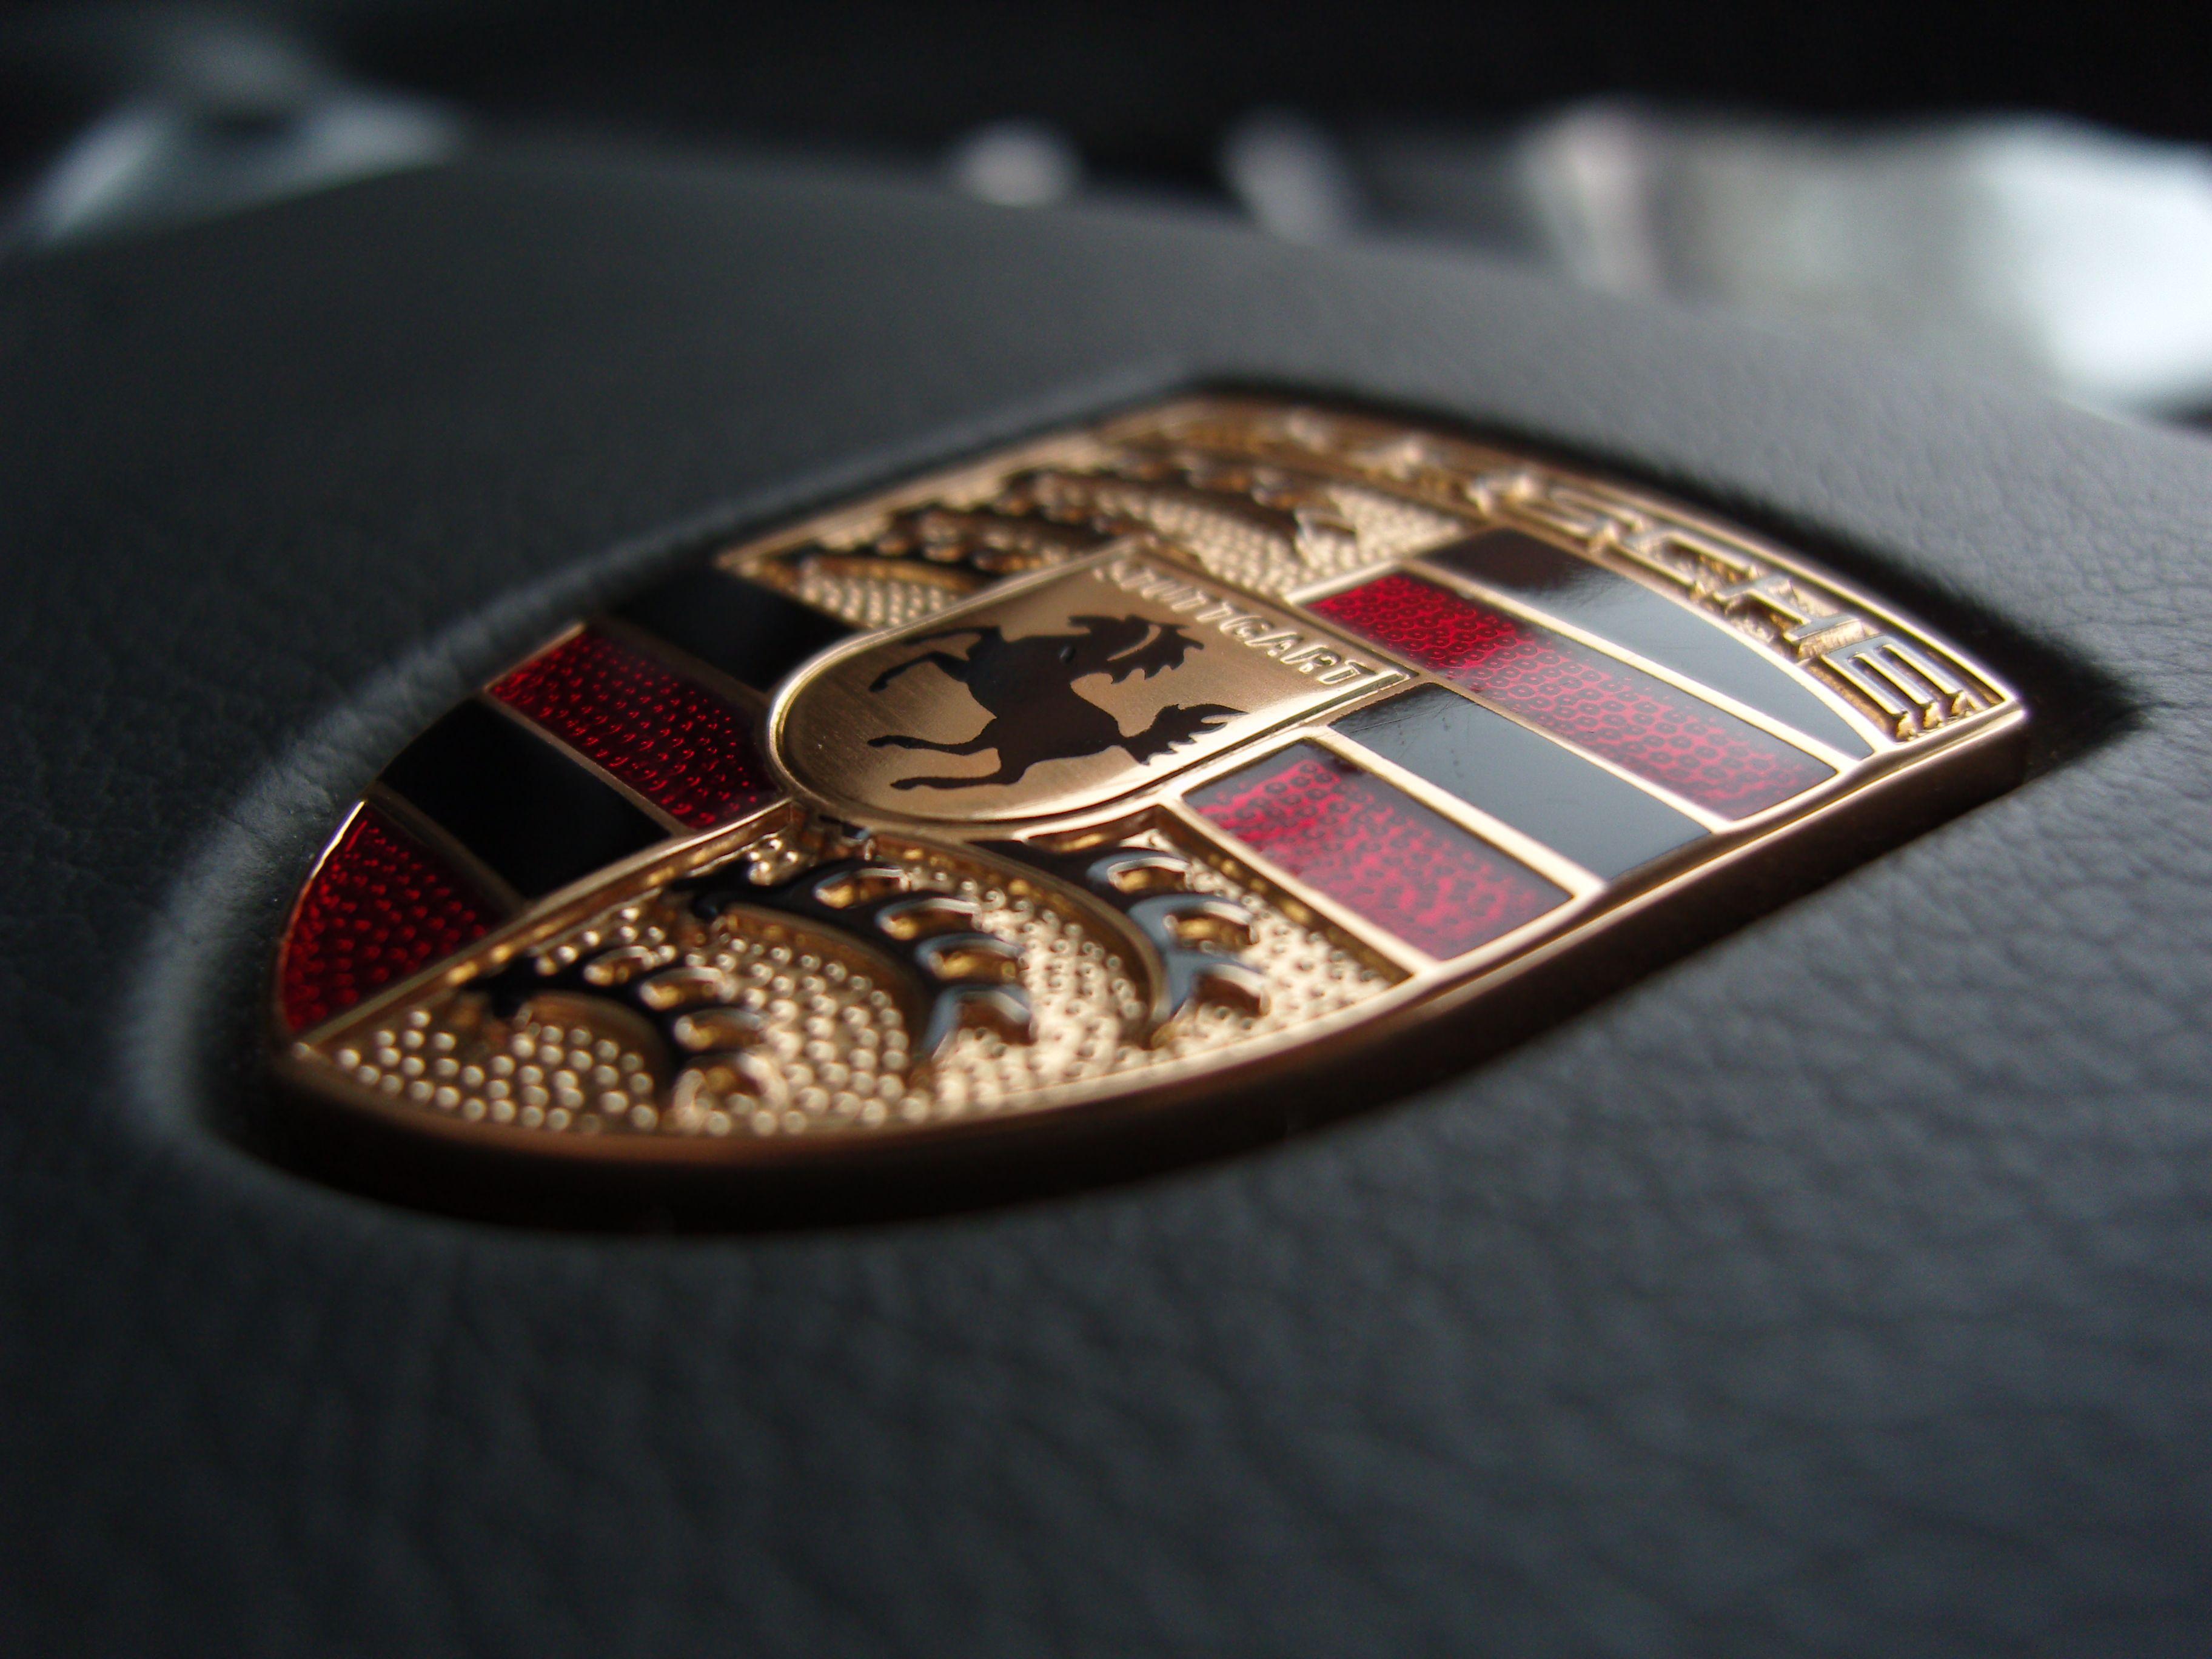 Stuttgart Car Logo - Porsche Logo, Porsche Car Symbol Meaning and History | Car Brand ...